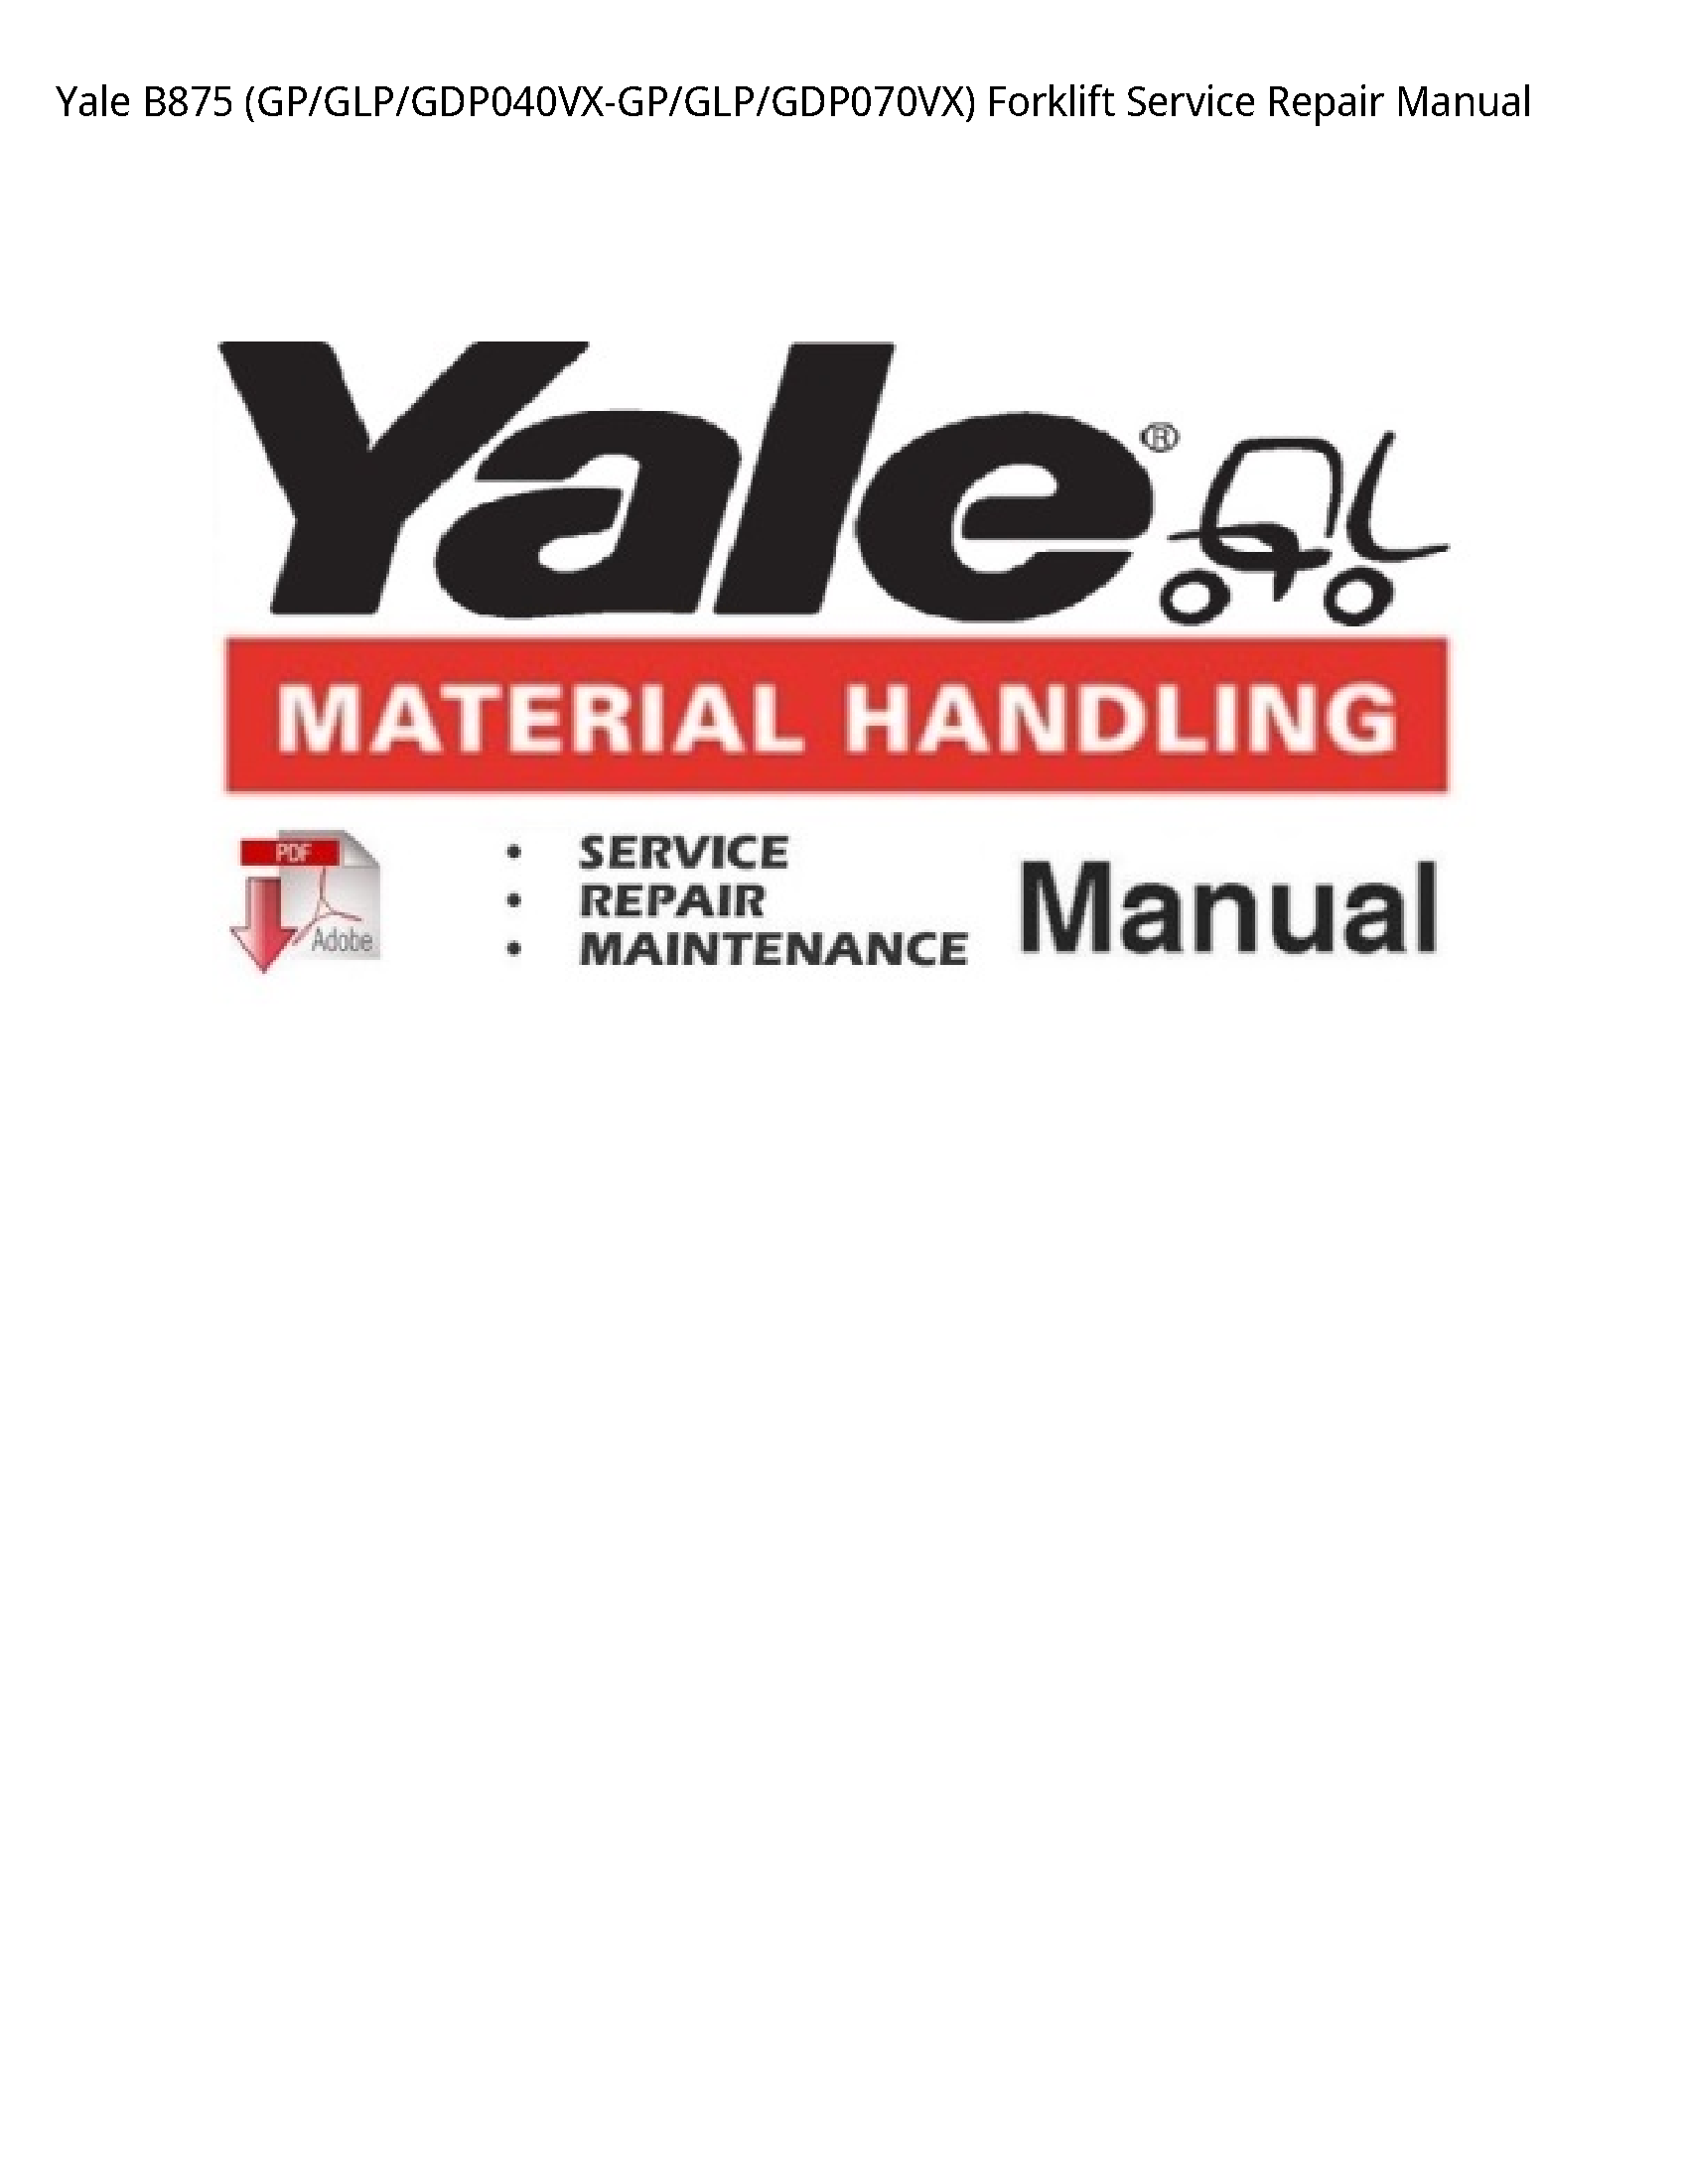 Yale B875 Forklift manual